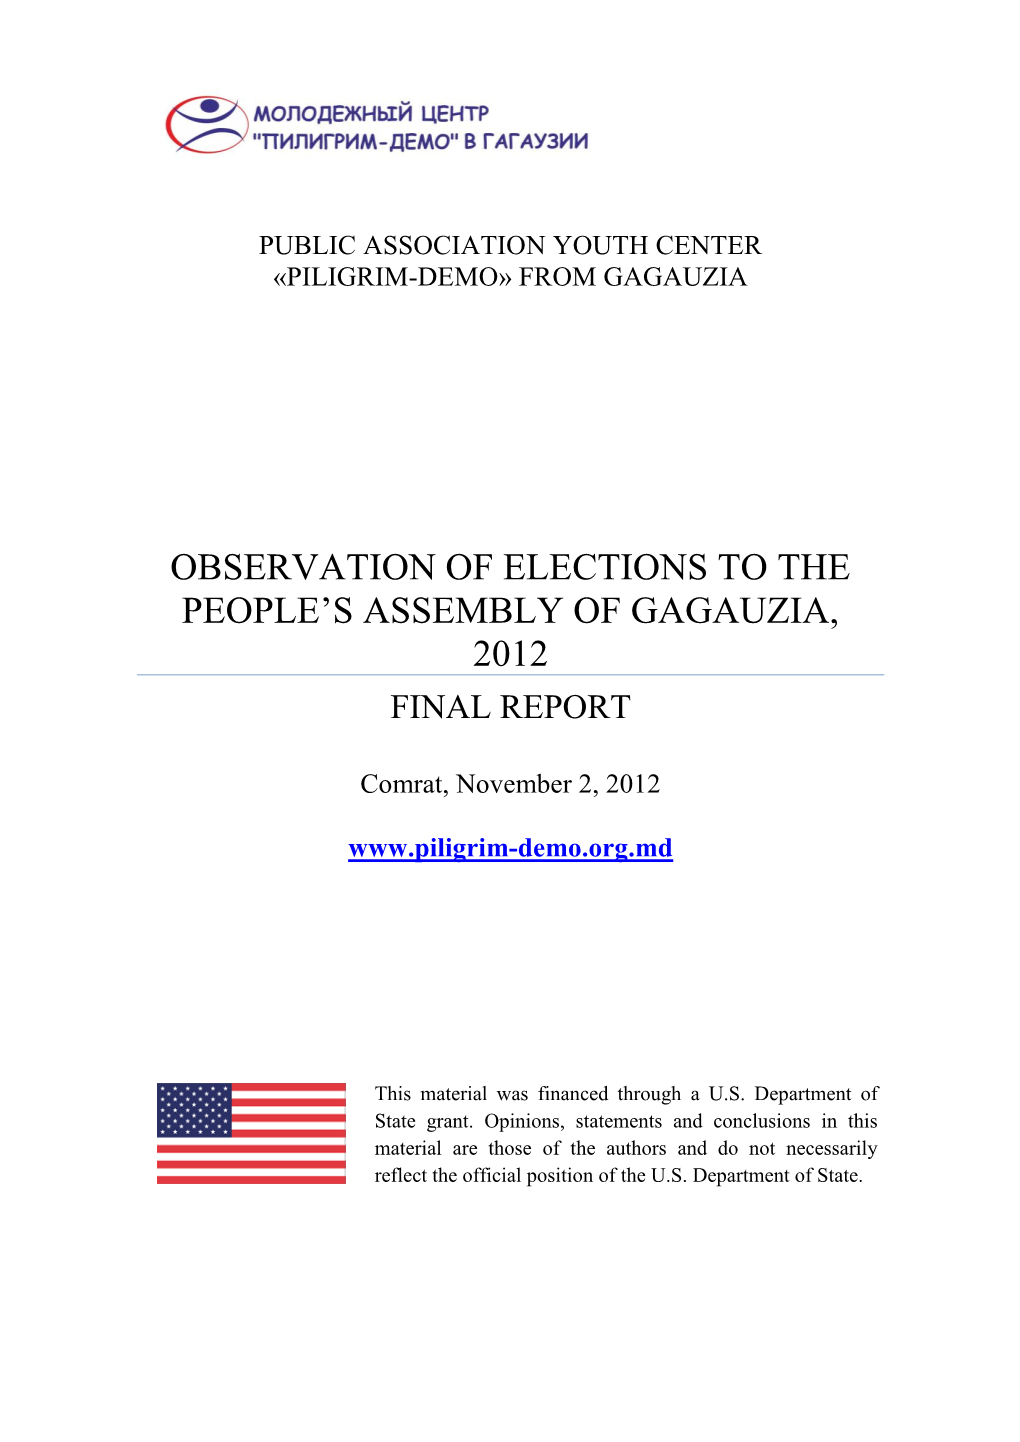 Final Report, November 2, 2012, PAG 2012